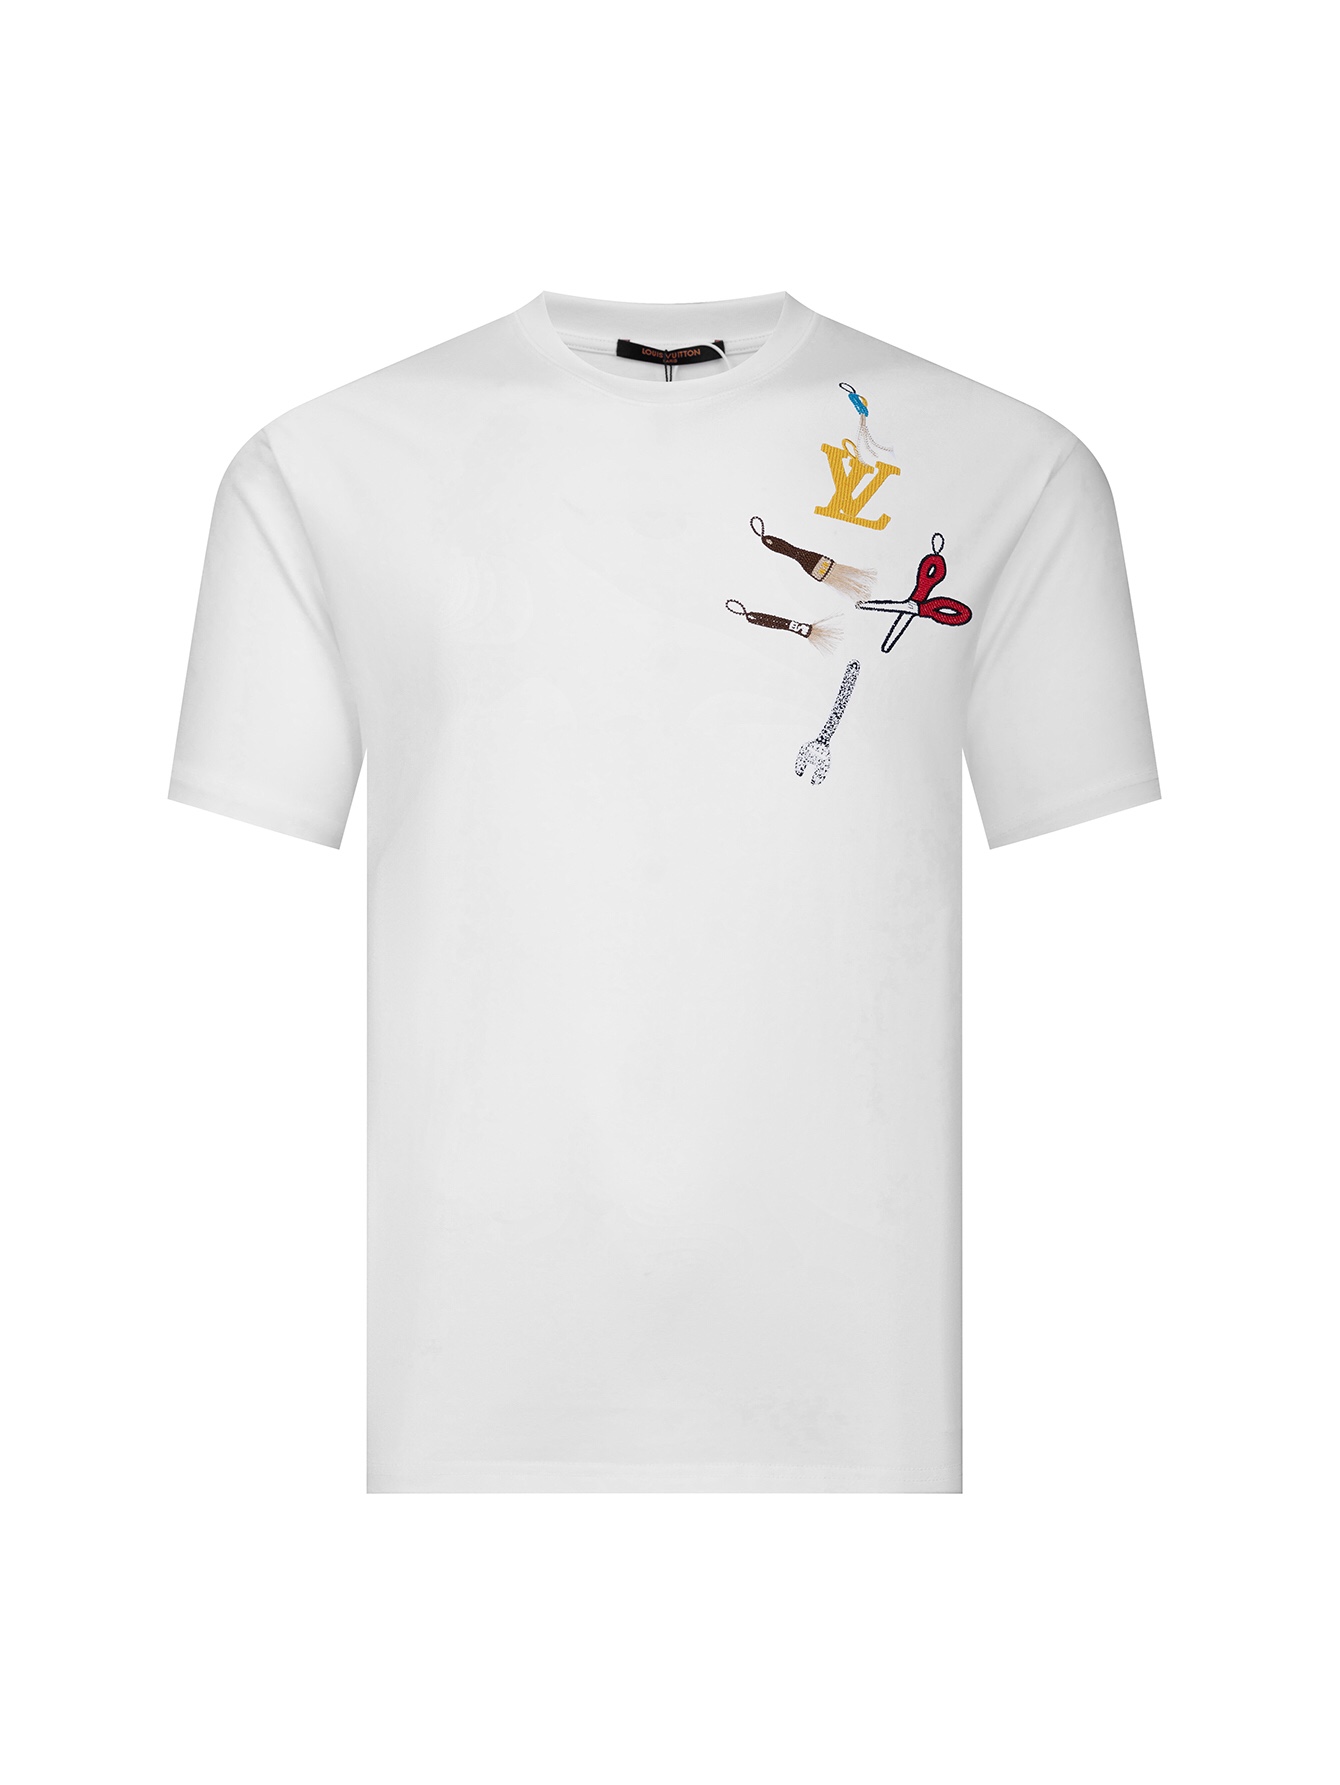 Louis Vuitton Clothing T-Shirt Black White Embroidery Unisex Short Sleeve